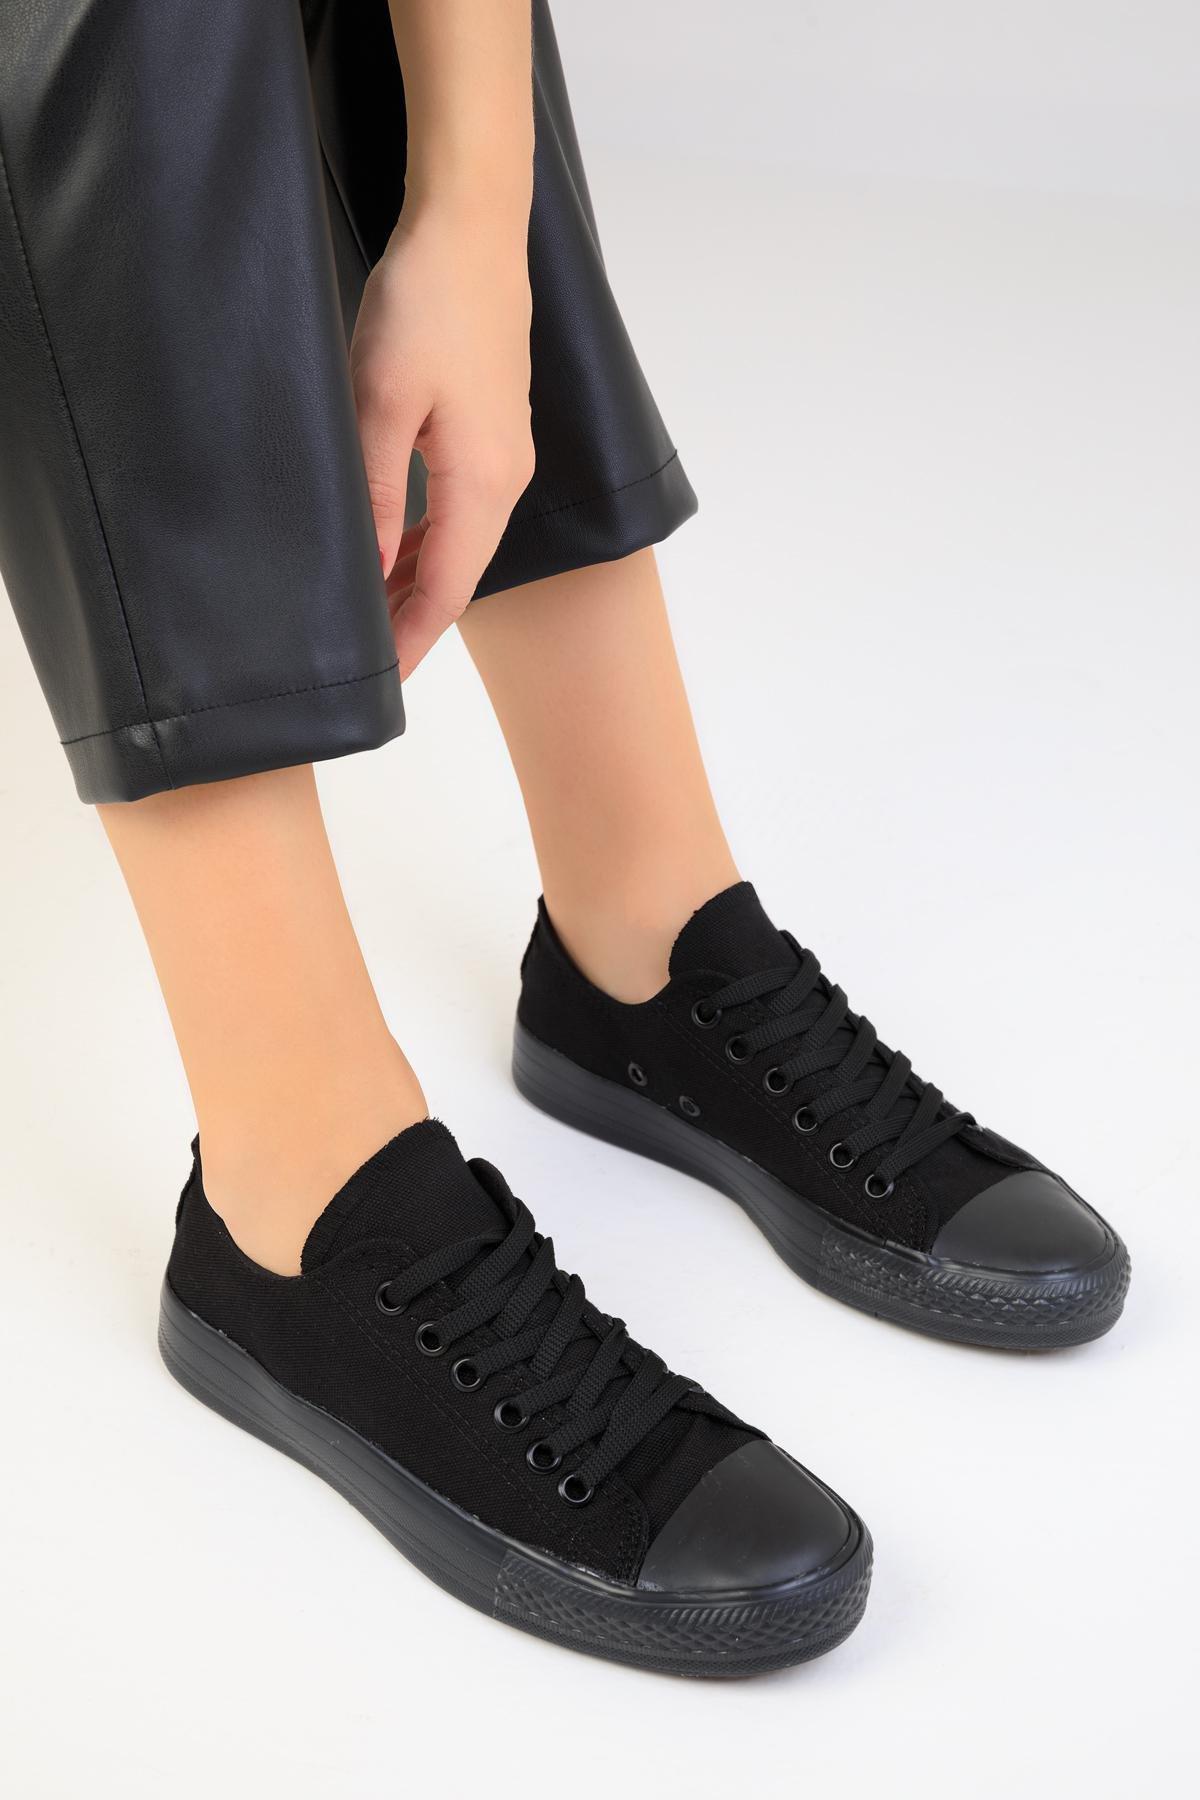 SOHO - Black Canvas Sneakers